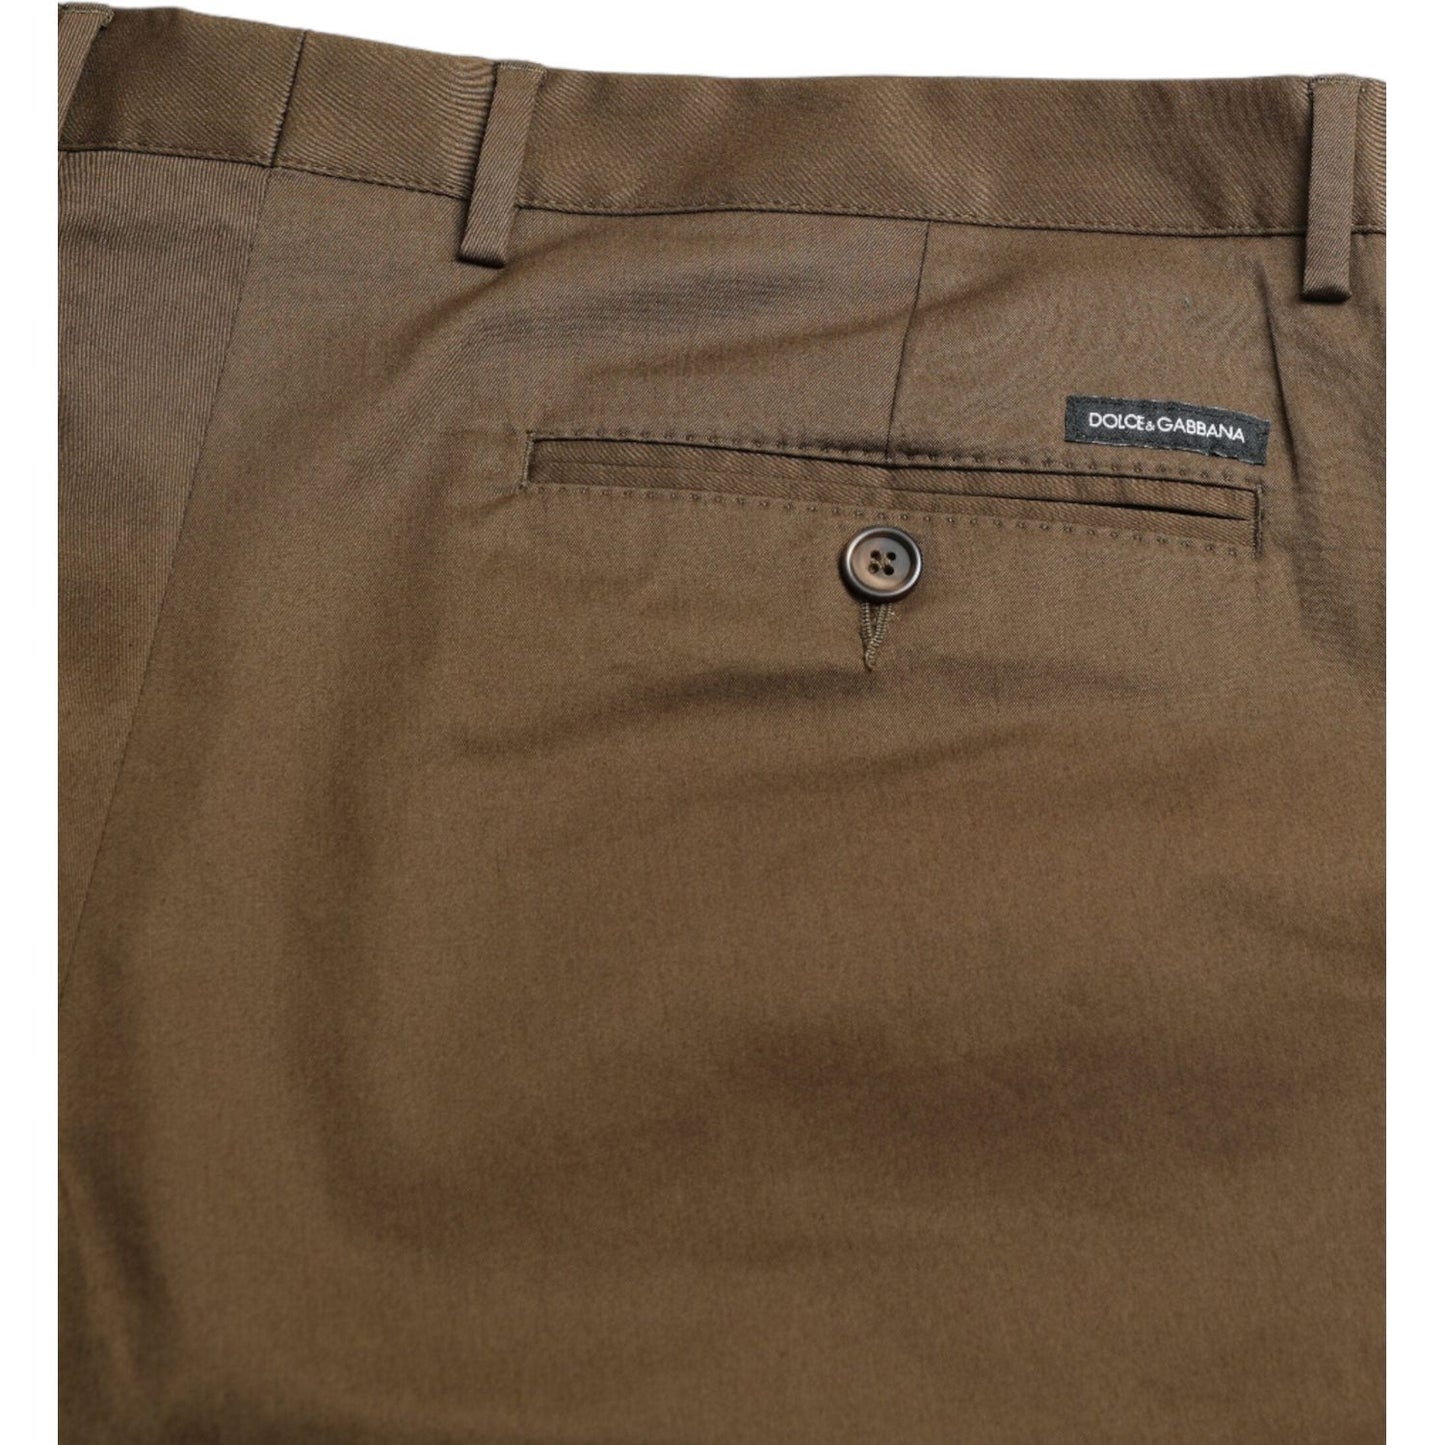 Dolce & Gabbana Chic Brown Bermuda Shorts with Logo Detail brown-cotton-stretch-men-bermuda-shorts 465A5149-BG-scaled-5b6c9657-4ef.jpg